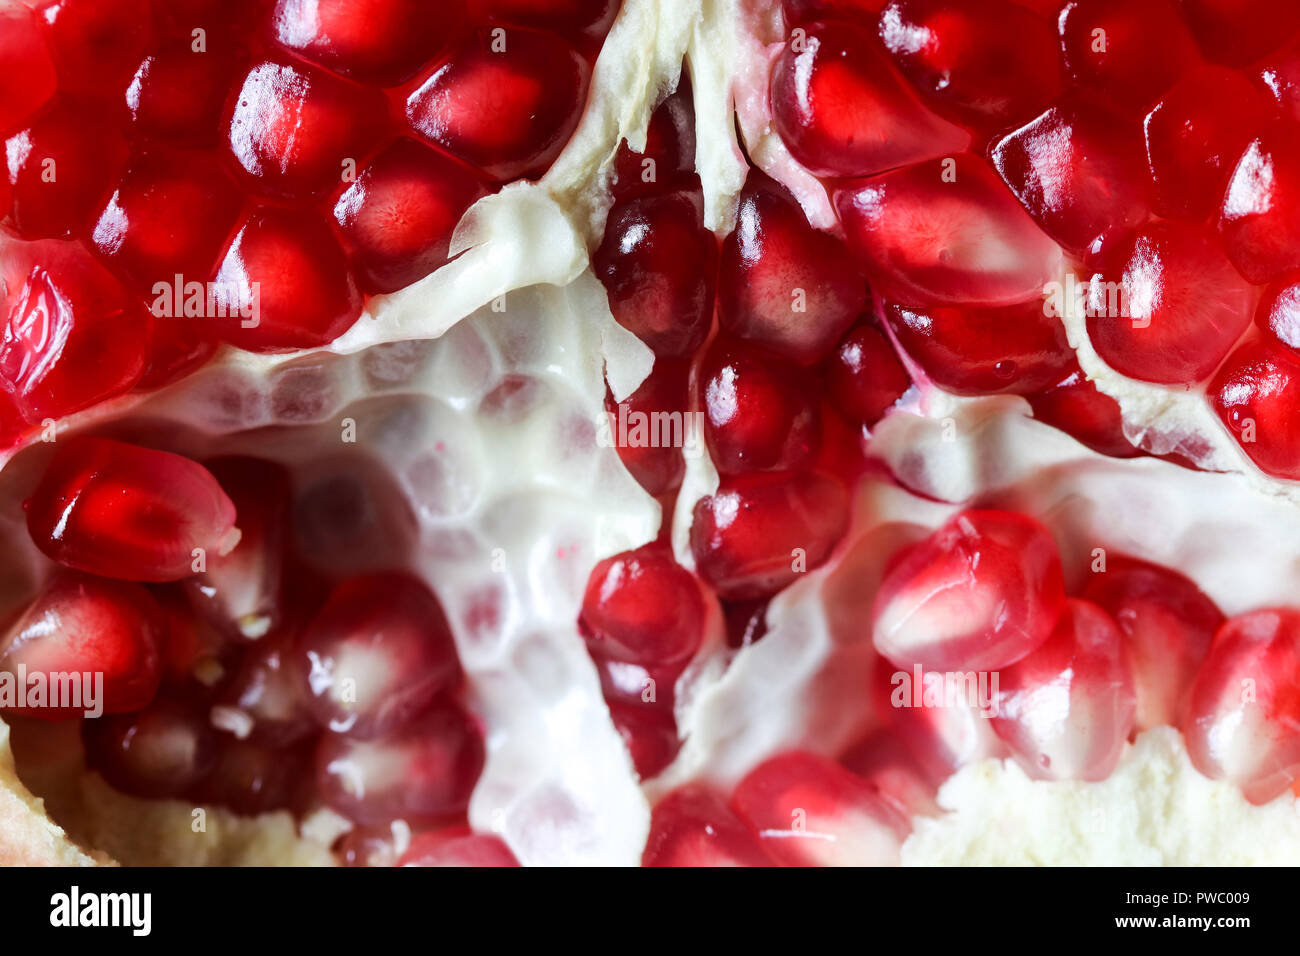 pomegranate fruit Stock Photo